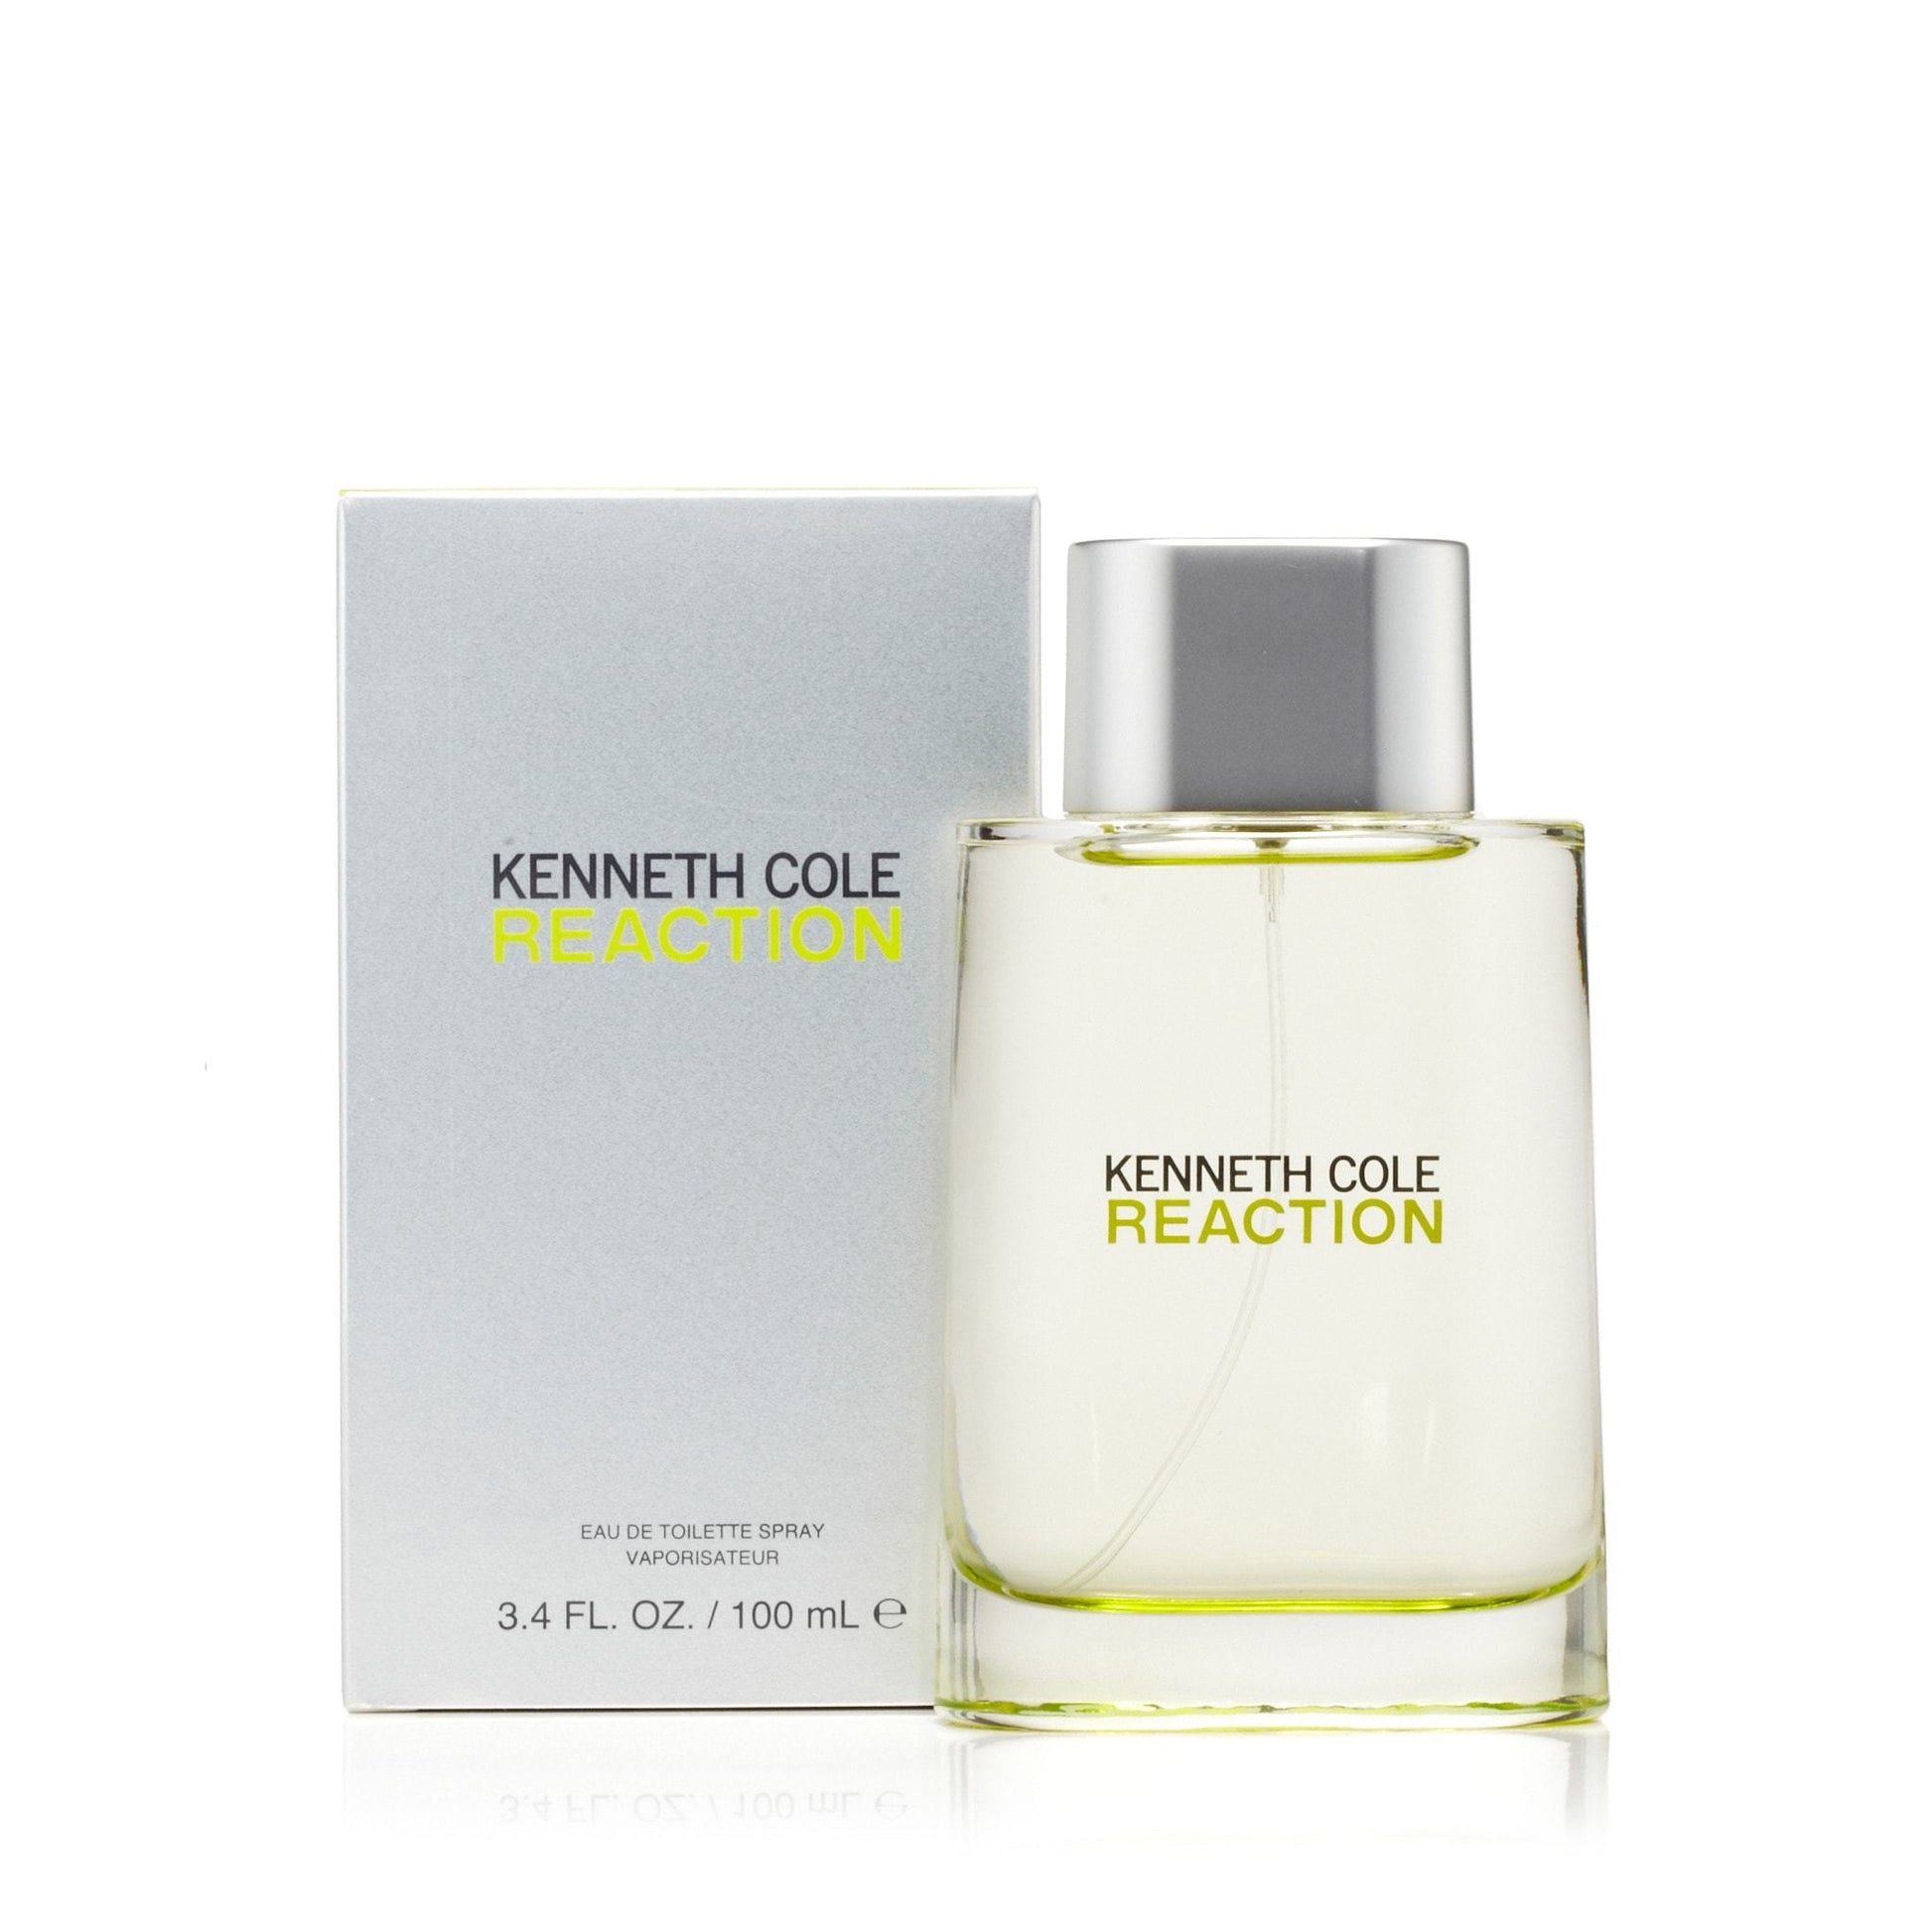 Kenneth Cole Reaction Eau de Toilette Spray for Men by Kenneth Cole, Product image 1